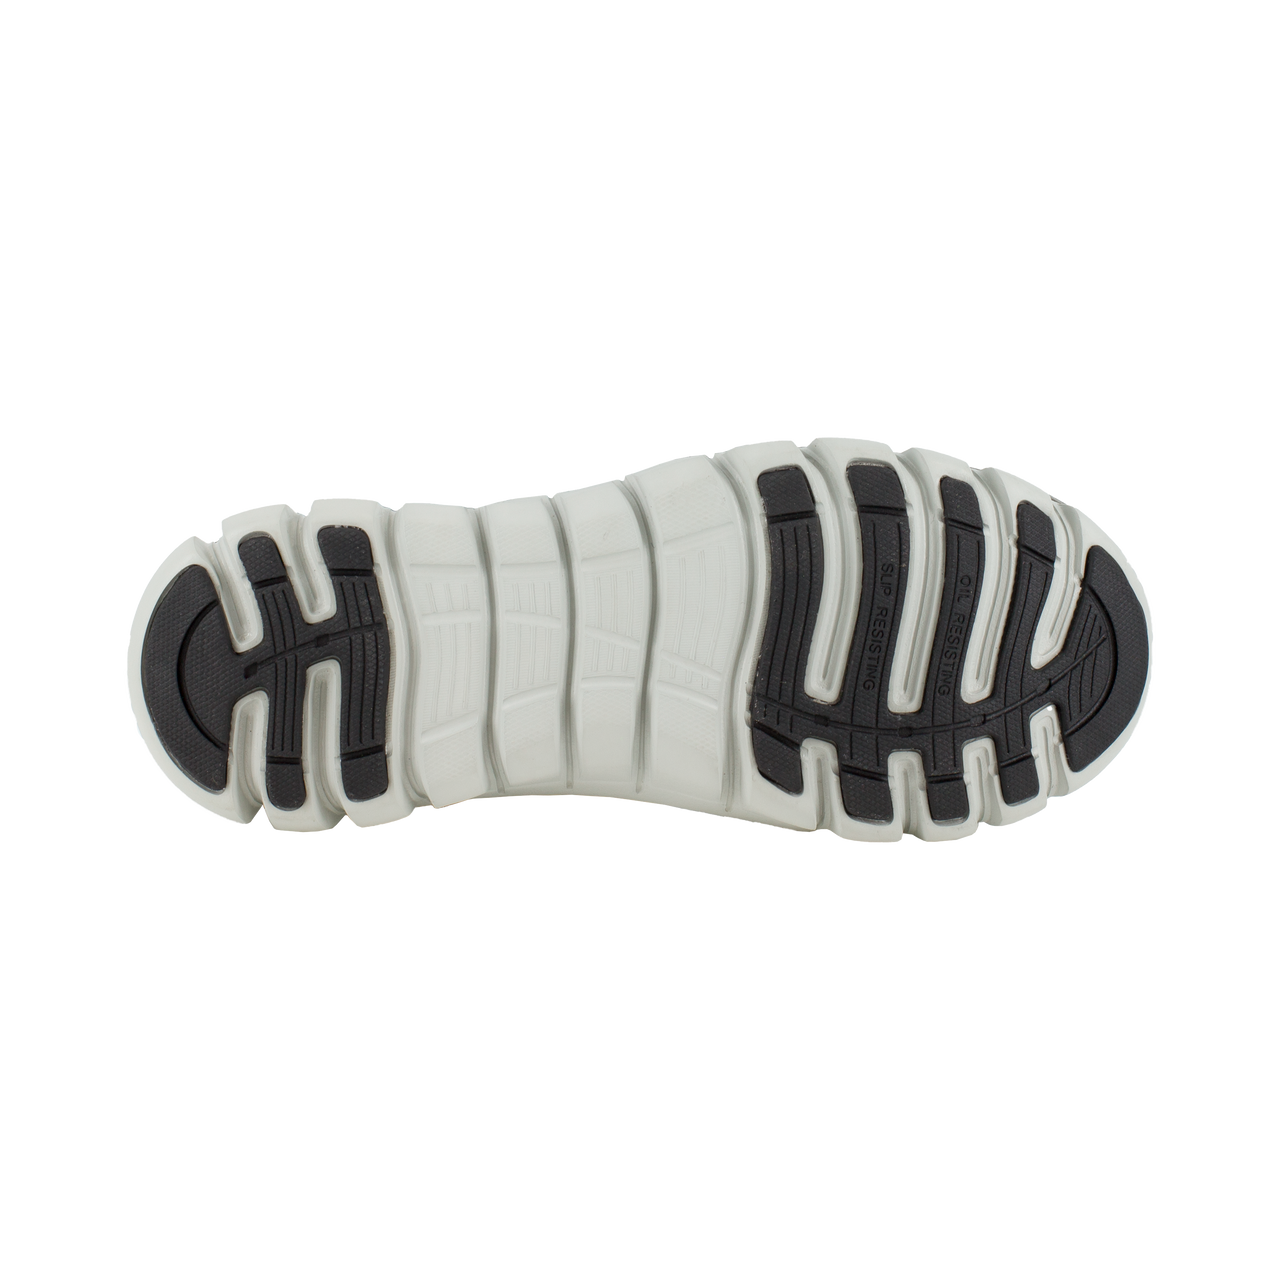 Rb051 Reebok Mesh Composite Toe Sneaker (Olive Green)